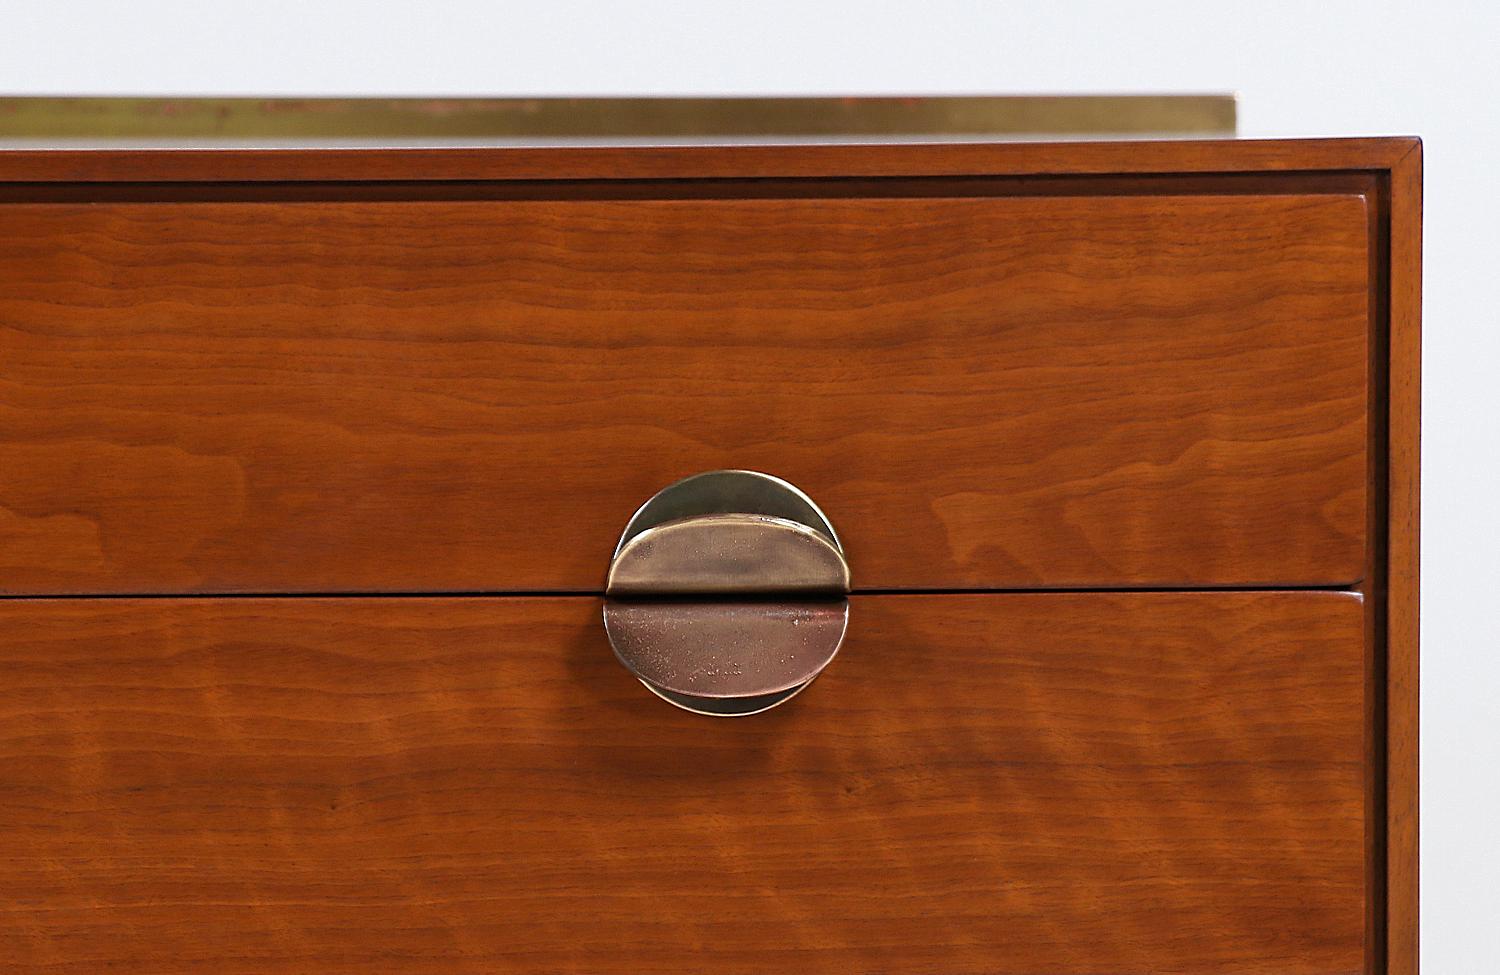 Finn Juhl Dresser with Brass Accents for Baker Furniture 1